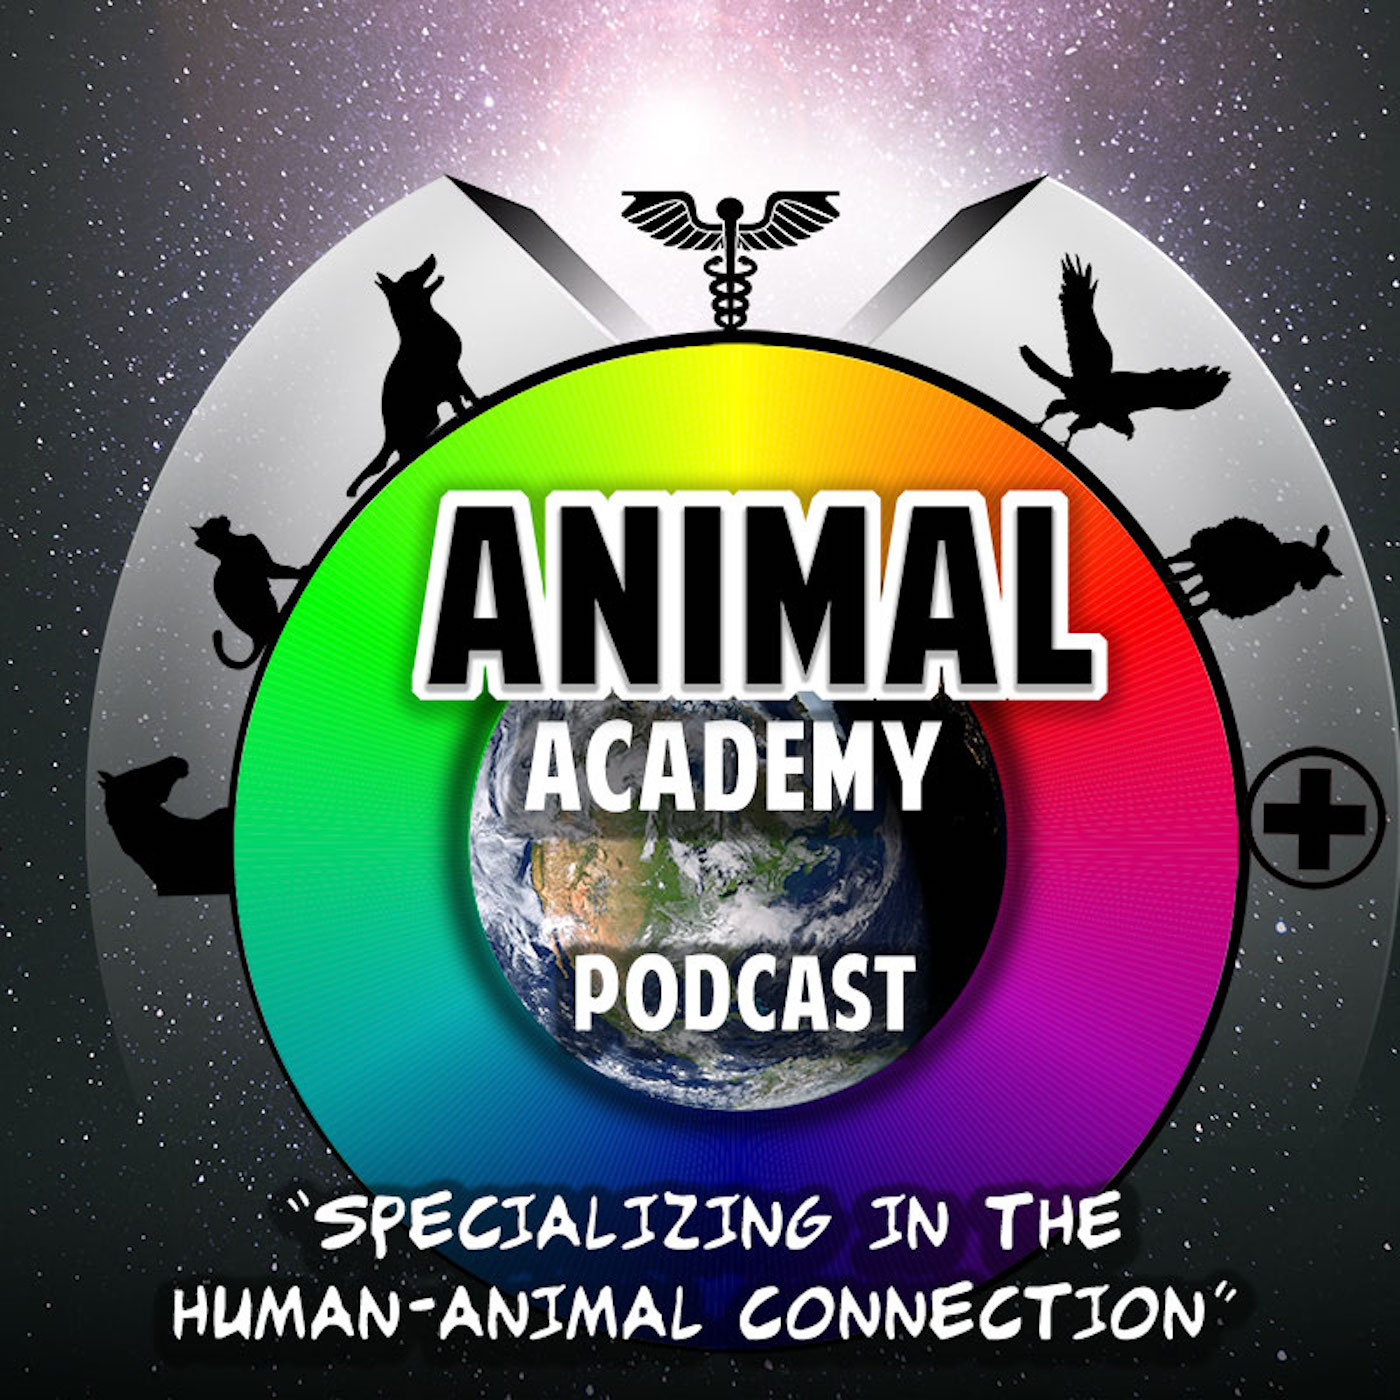 Artwork for podcast Animal Academy Podcast